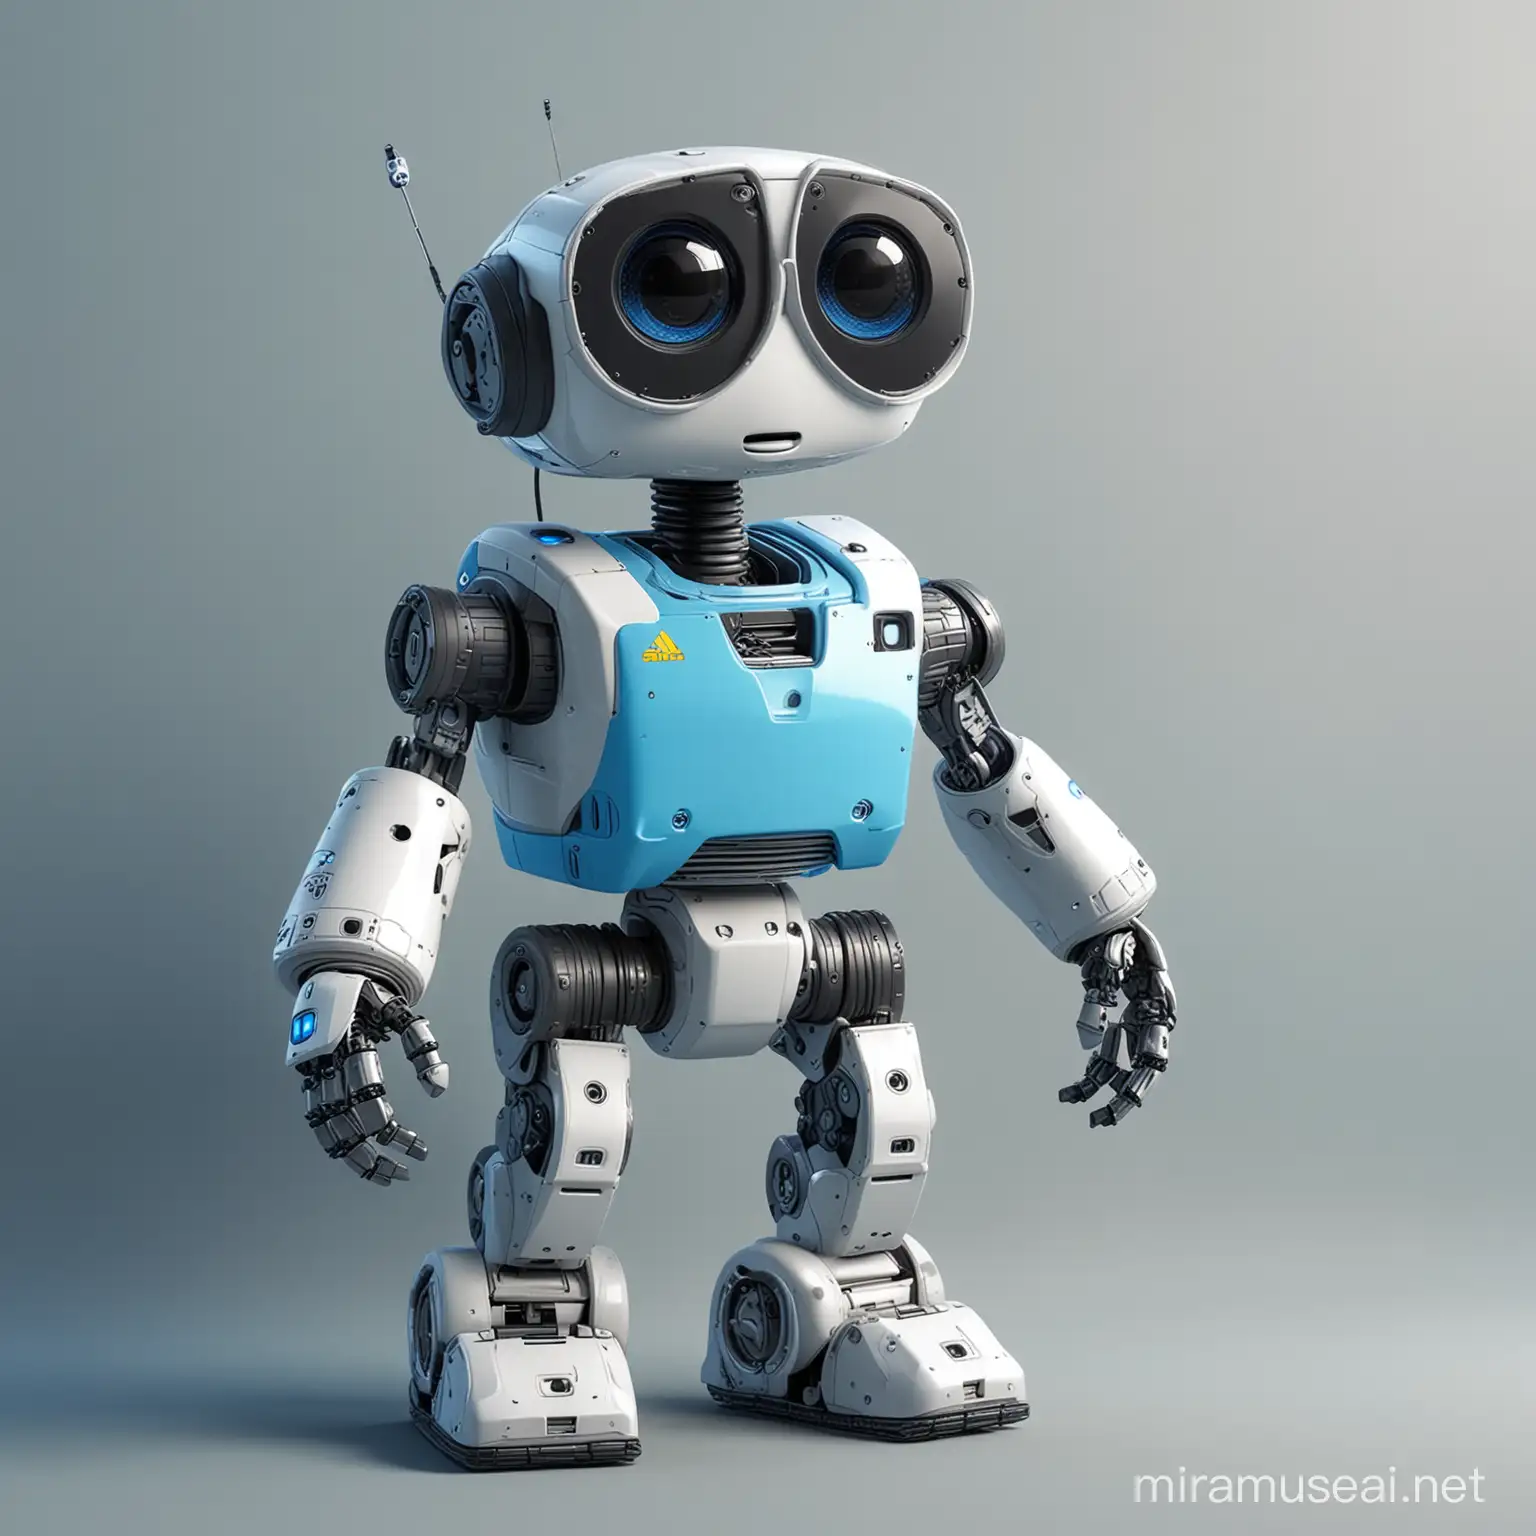 Futuristic 3D Realistic Digital Mascot in Sky Blue Tones